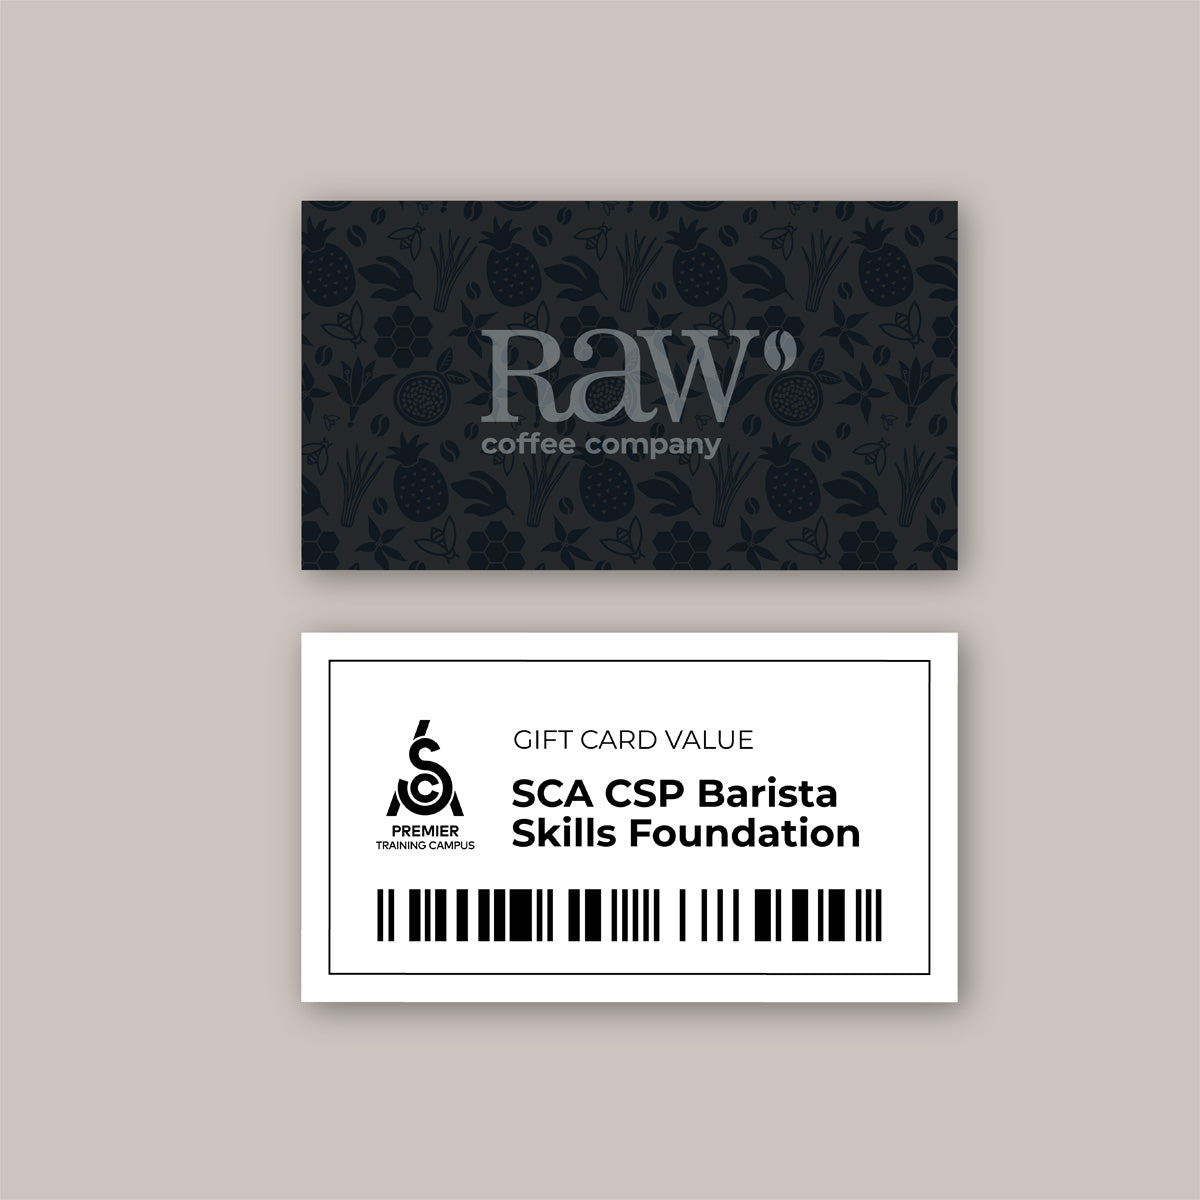 SCA-CSP-Barista-Skills-Foundation-Gift-Voucher_RAW-Coffee-Company